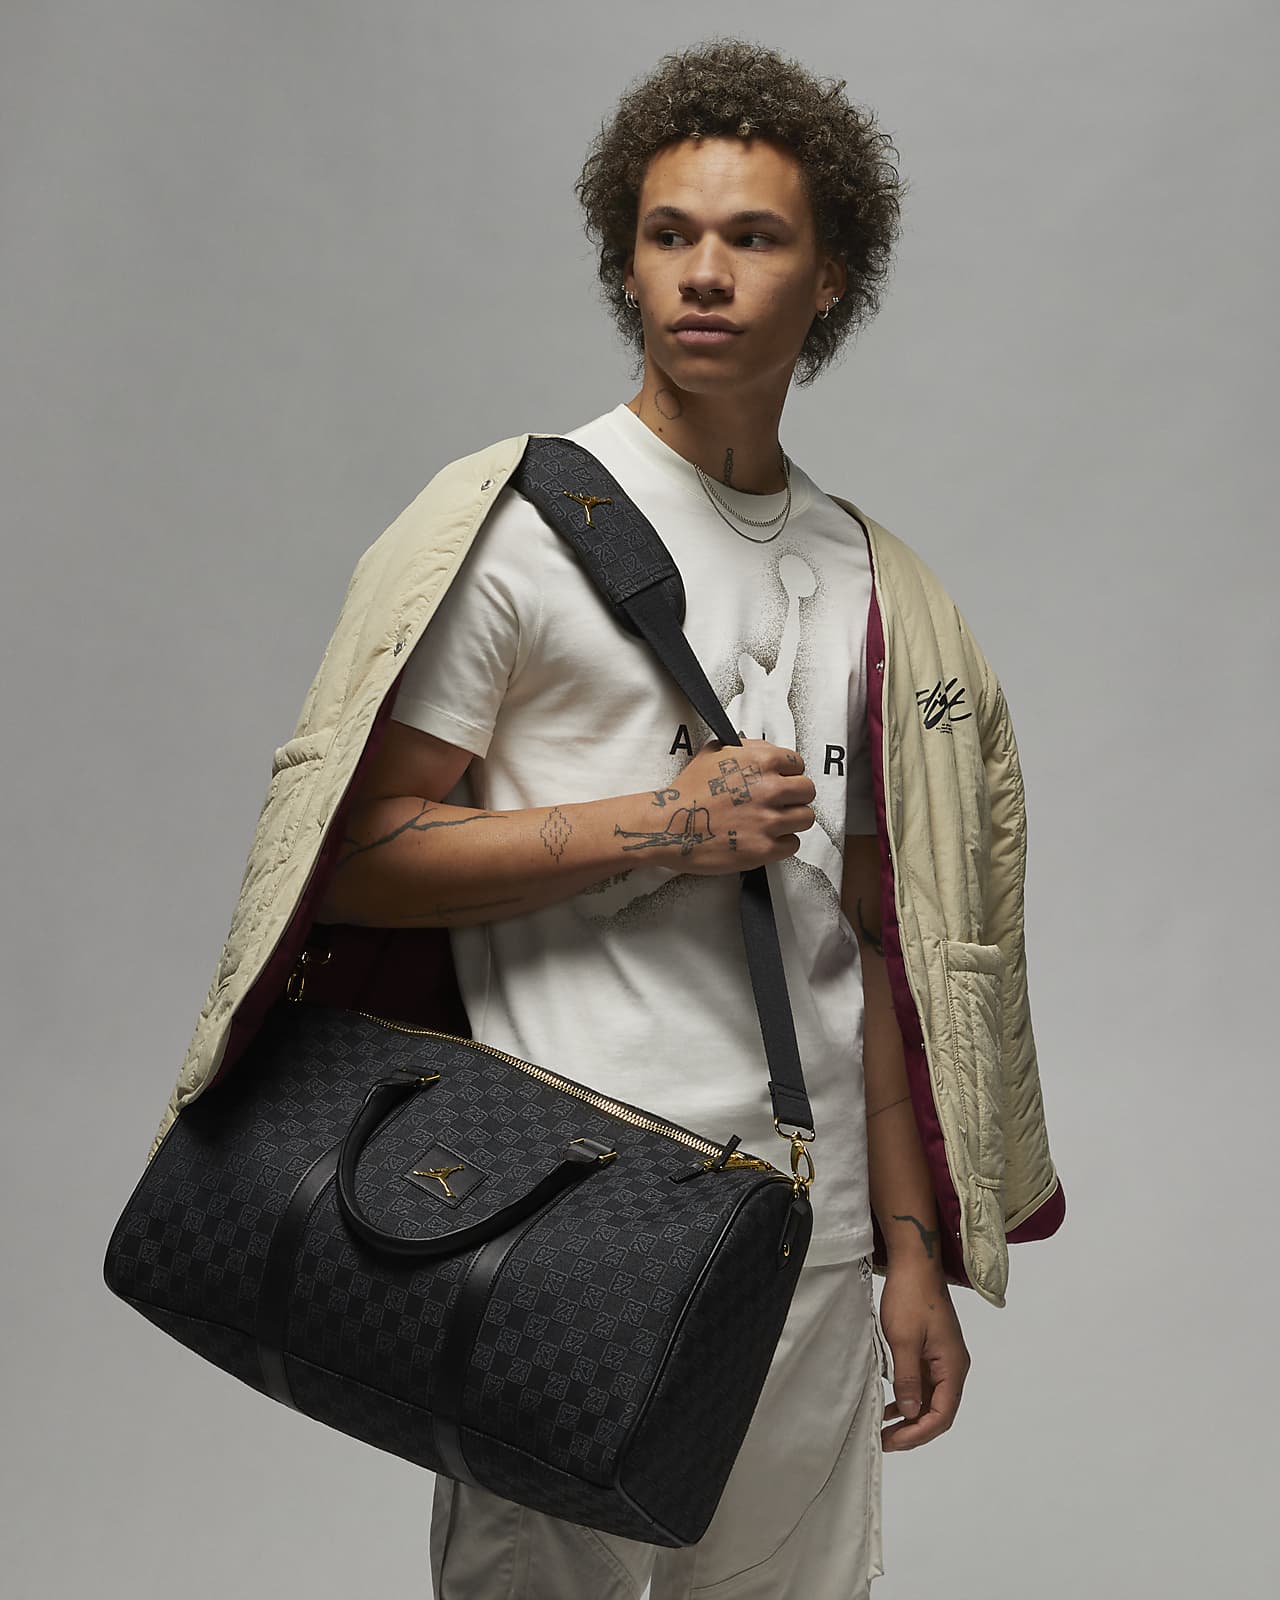 Louis Vuitton Duffle/Gym Bags for Men for sale